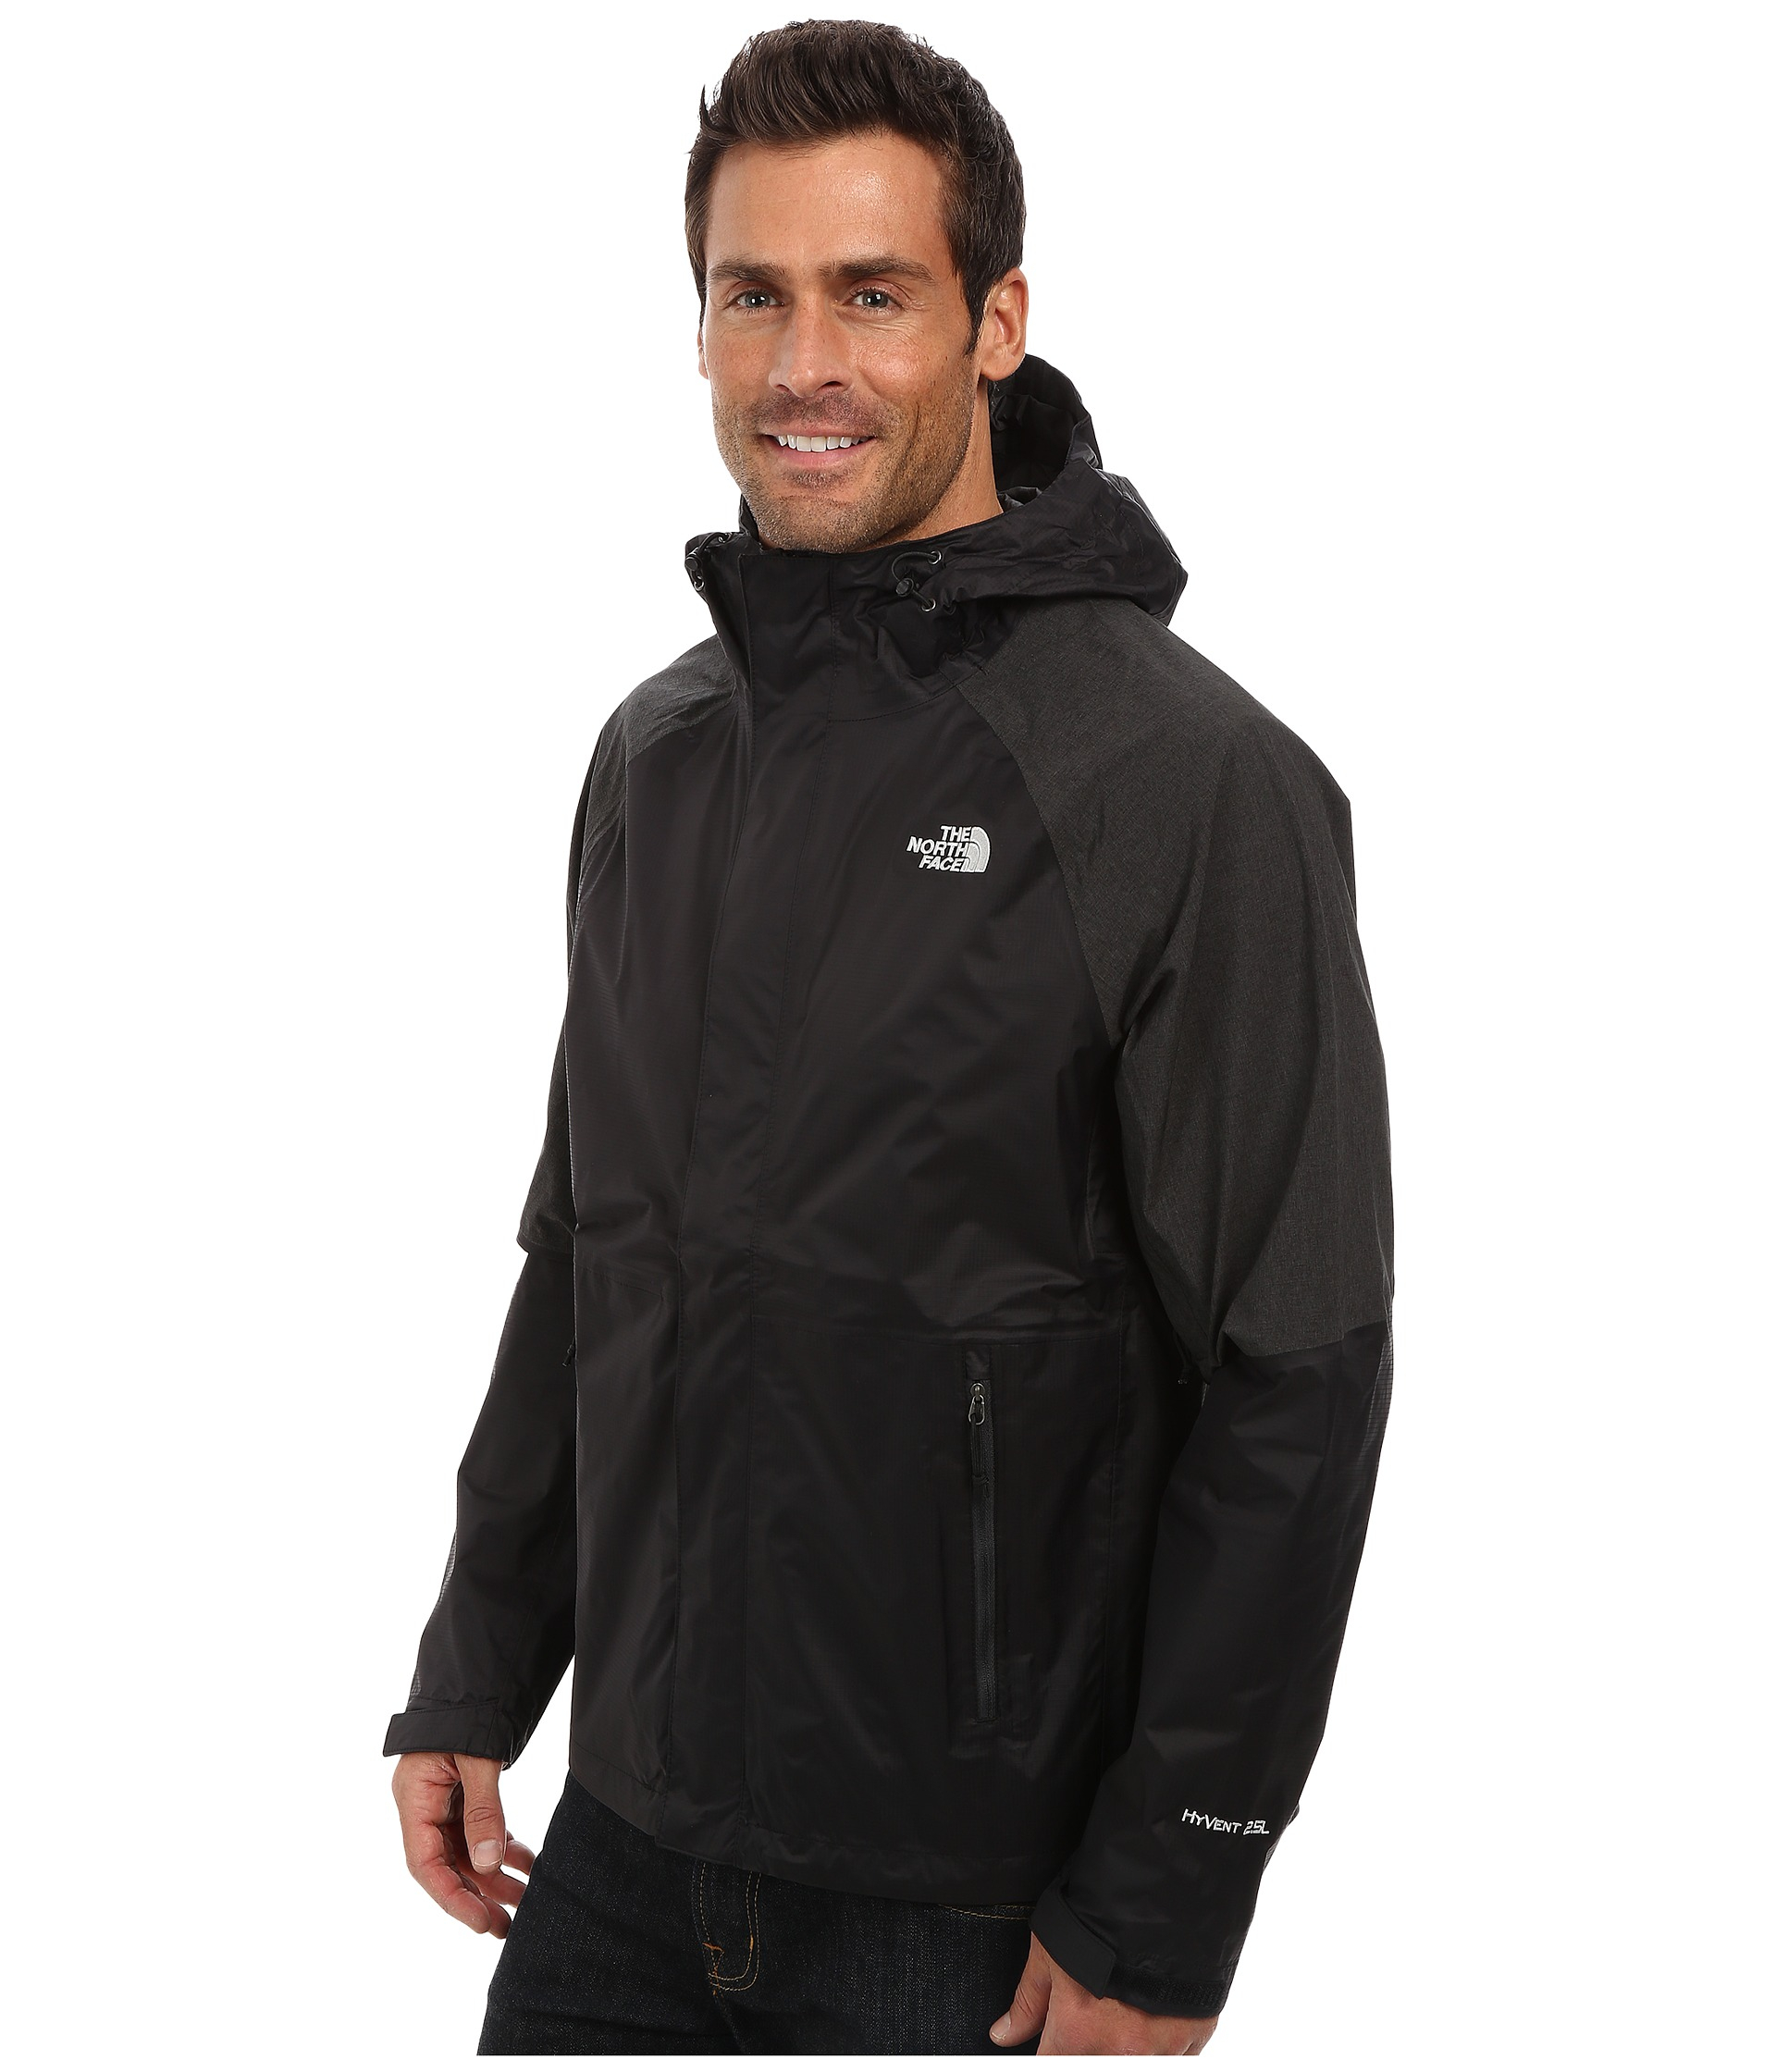 The North Face Venture Hybrid Jacket in Black for Men - Lyst